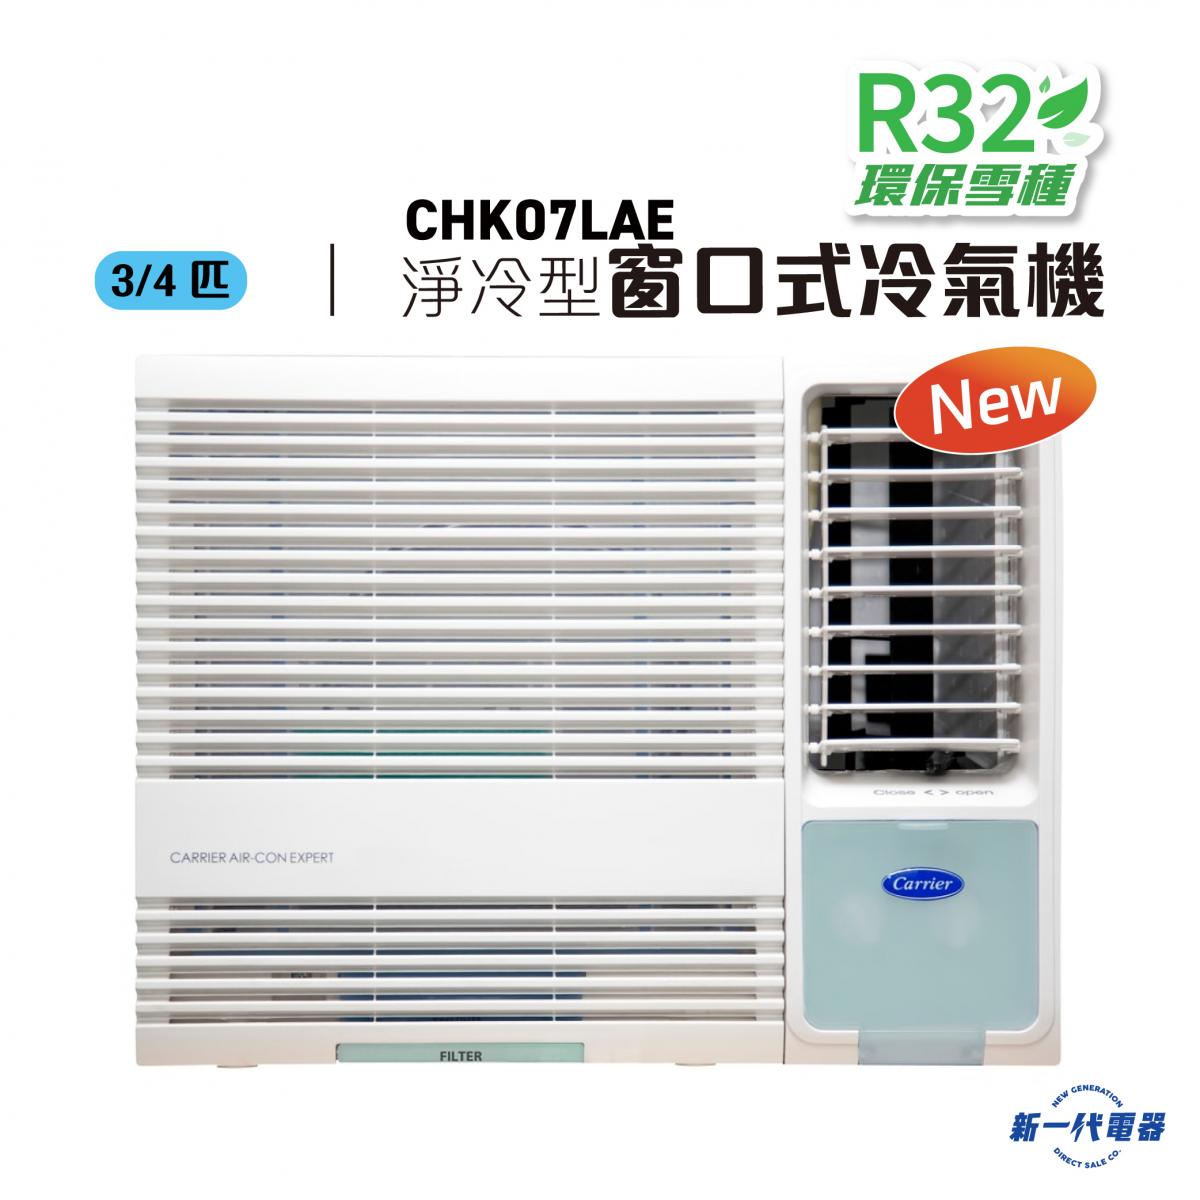 CHK07LAE -3/4匹 R32 淨冷型 窗口機 (CHK-07LAE)